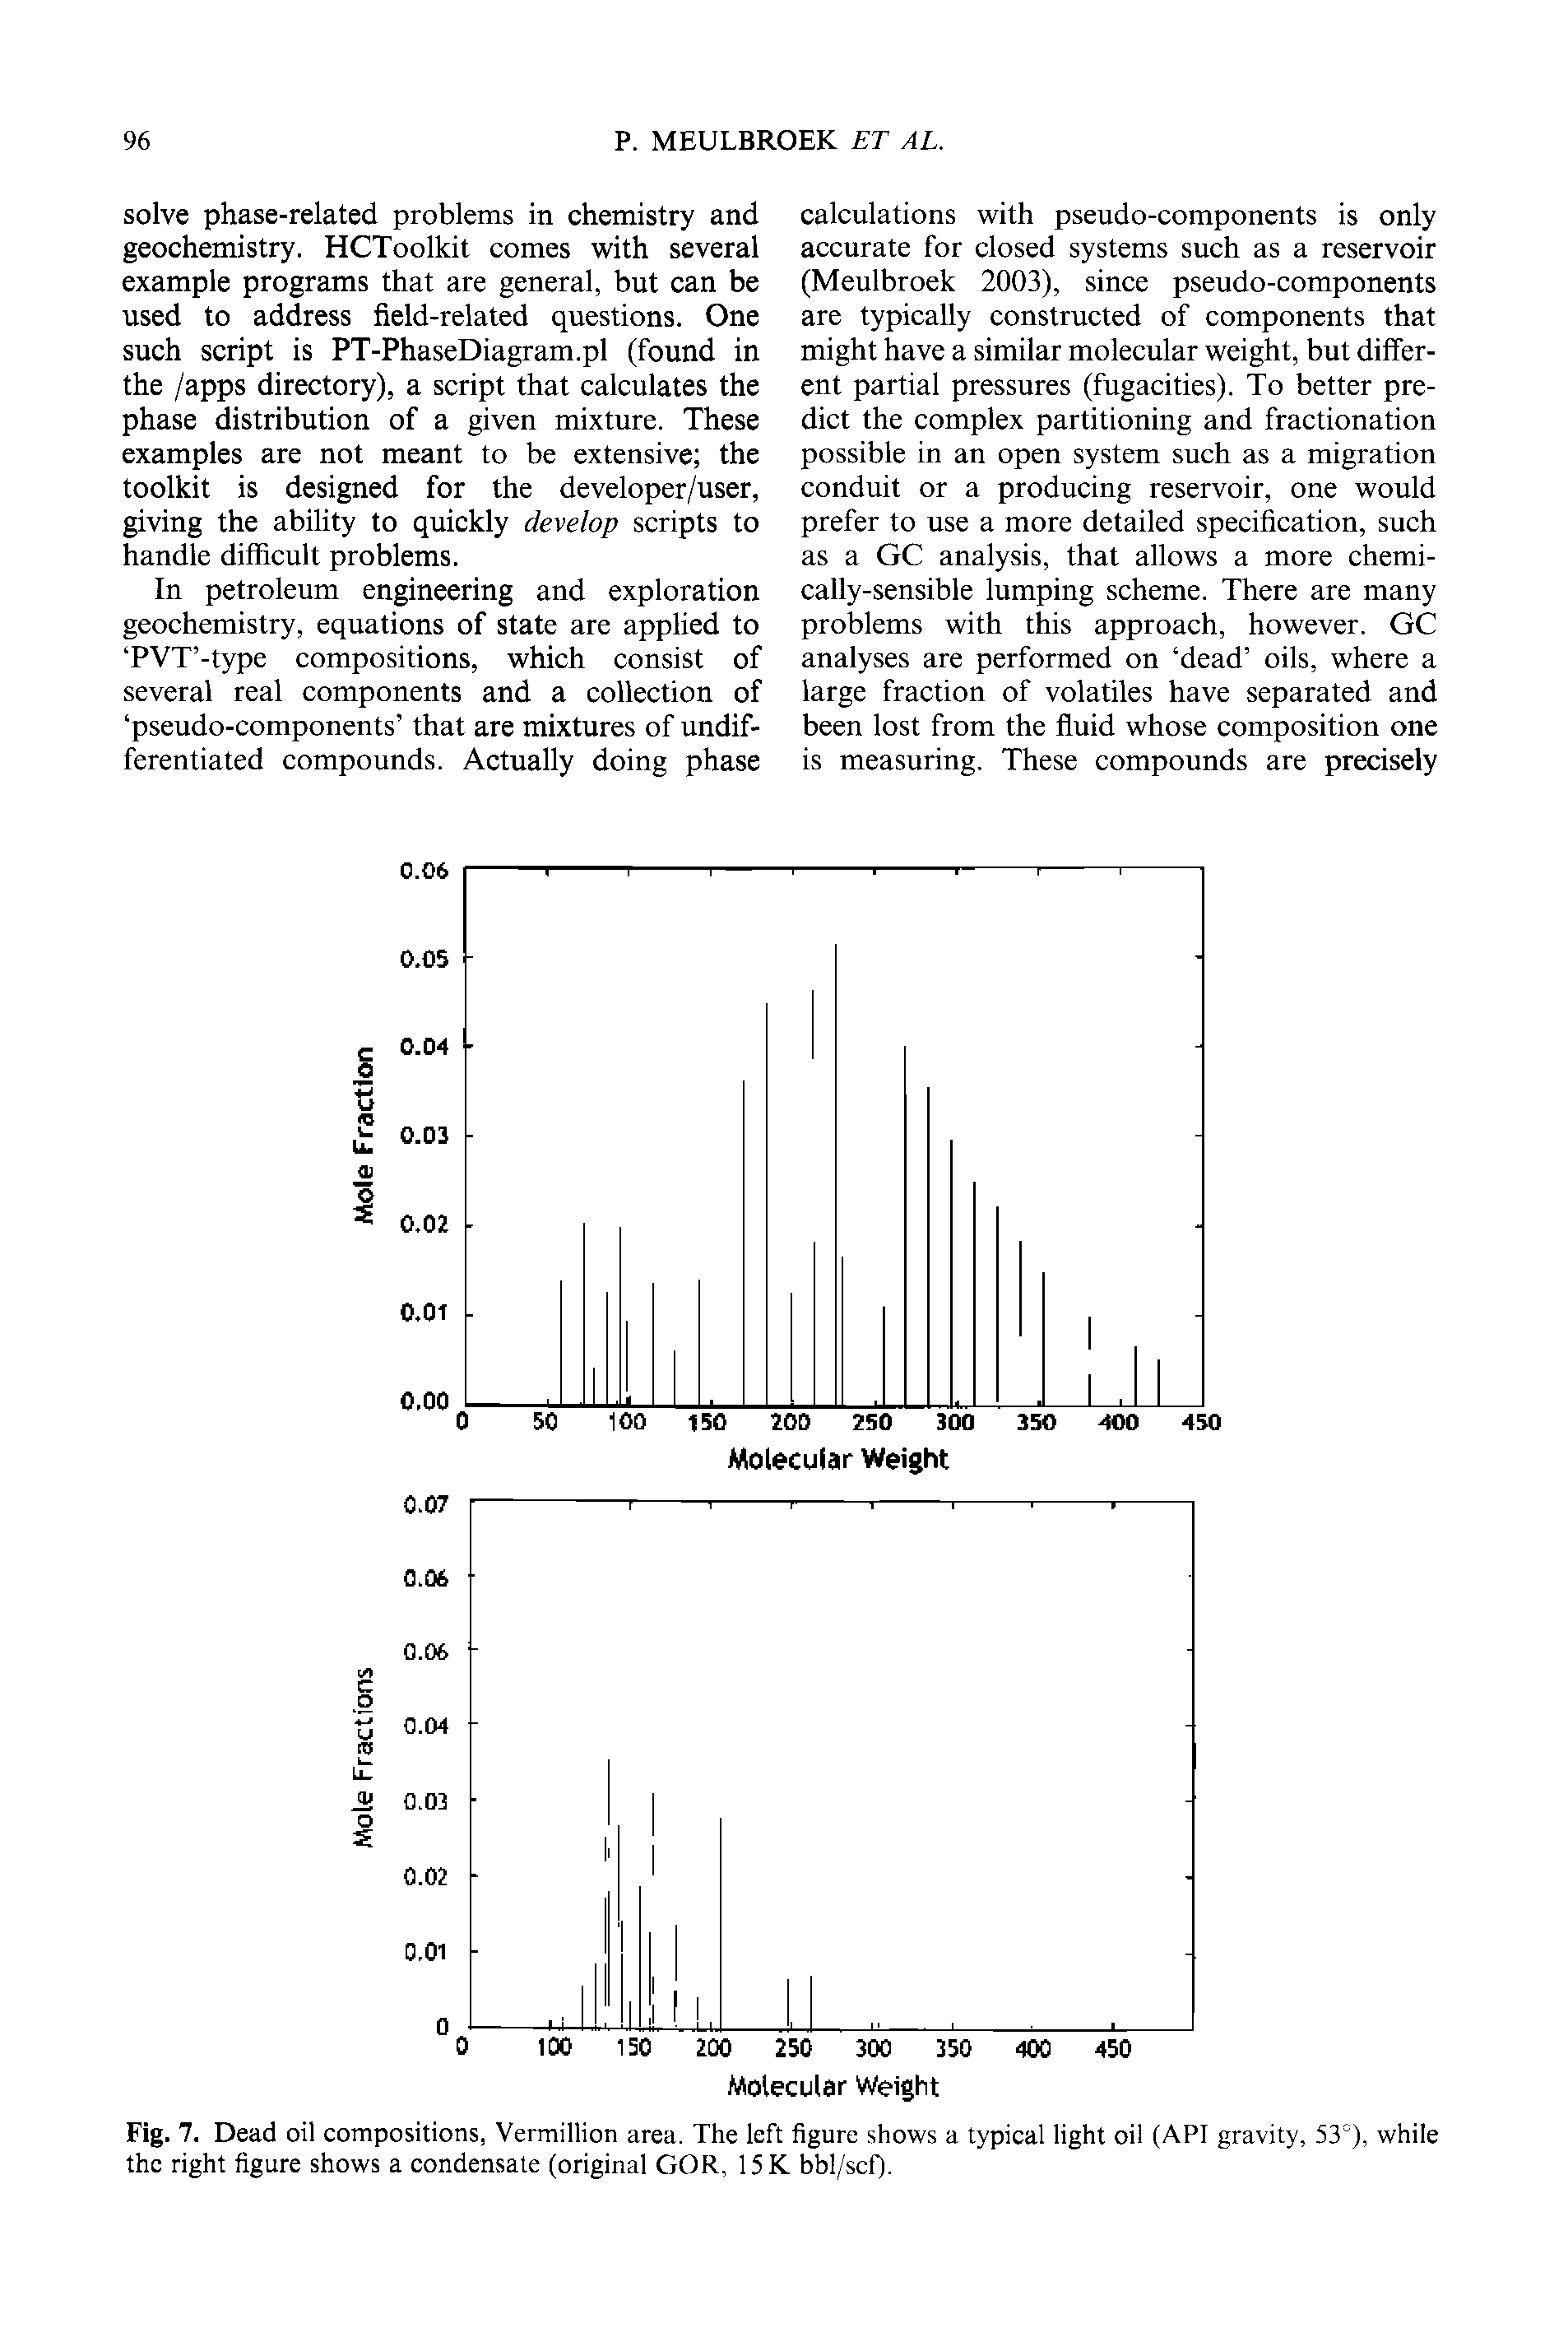 Fig. 7. Dead oil compositions, Vermillion area. The left figure shows a typical light oil (API gravity, 53°), while the right figure shows a condensate (original GOR, 15 K bbl/scf).